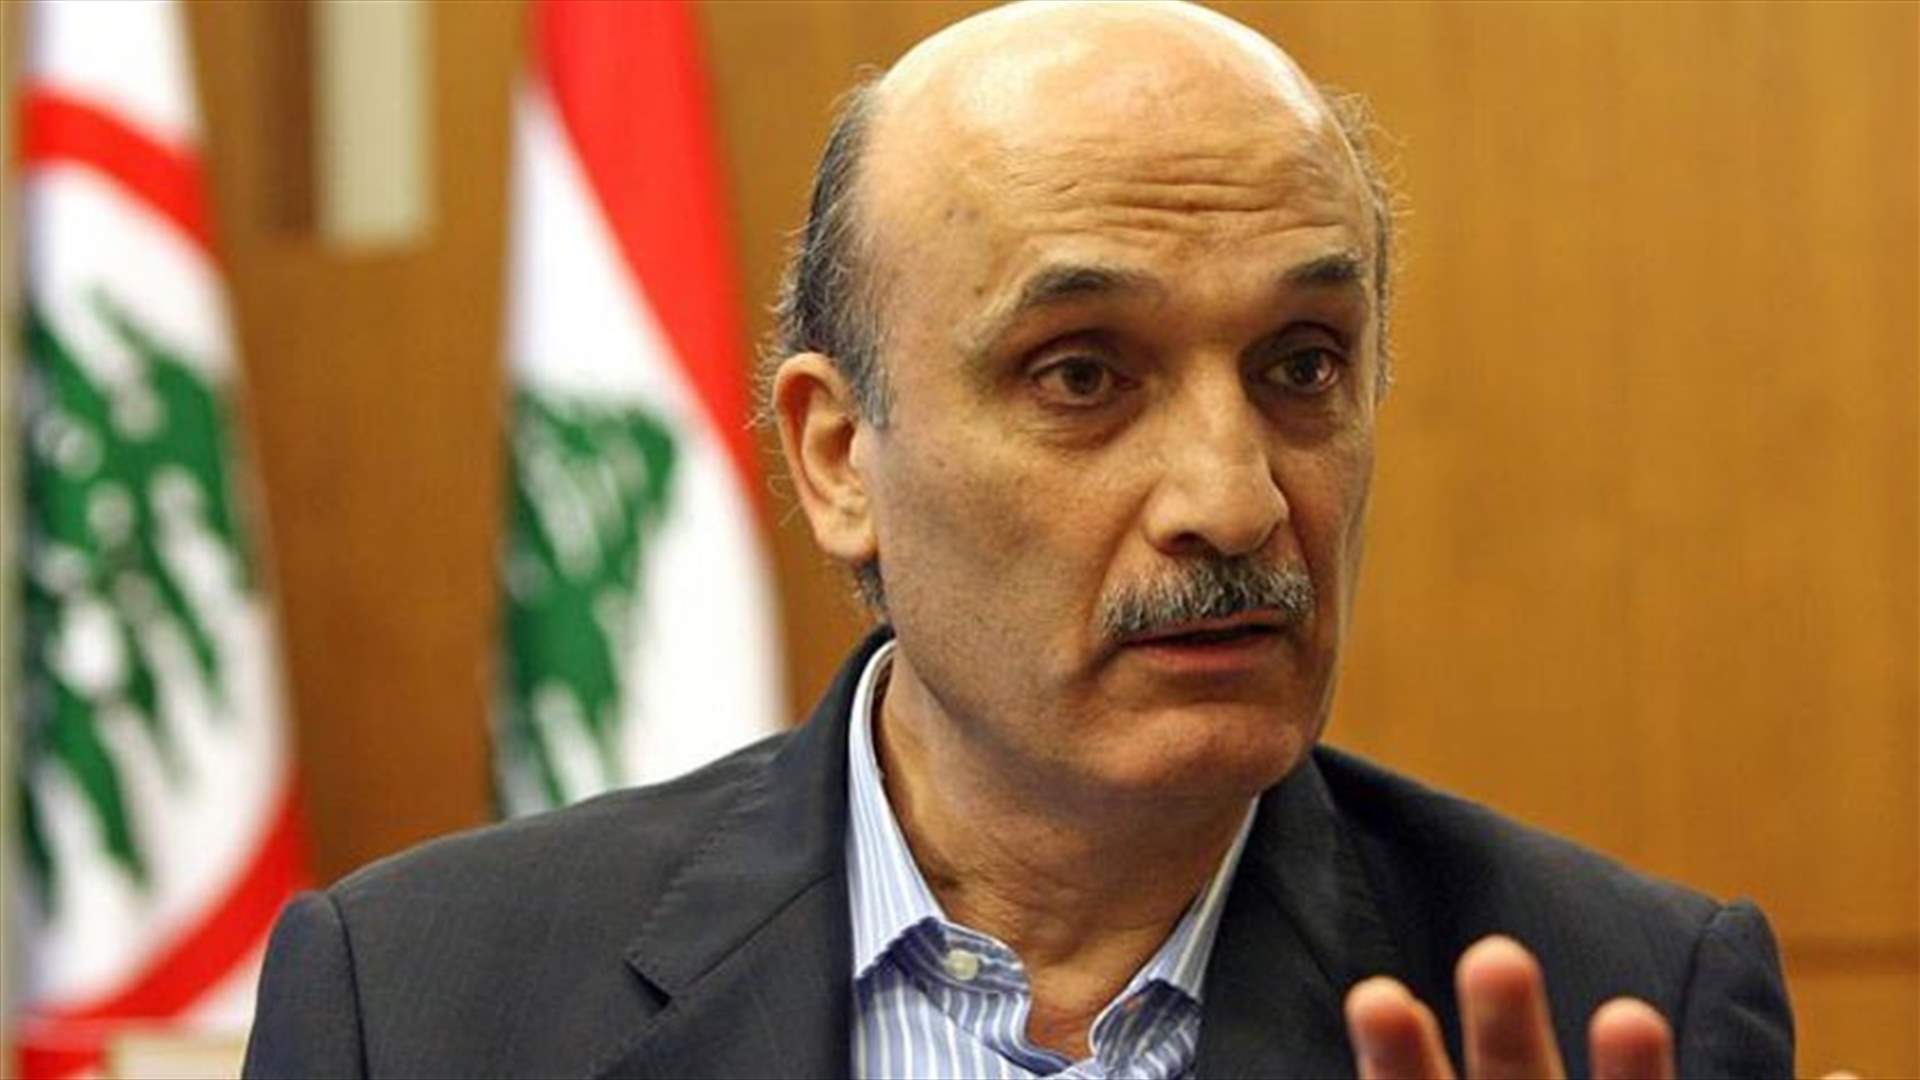 Geagea: Should Iran wish to help Lebanon, why not&#63;